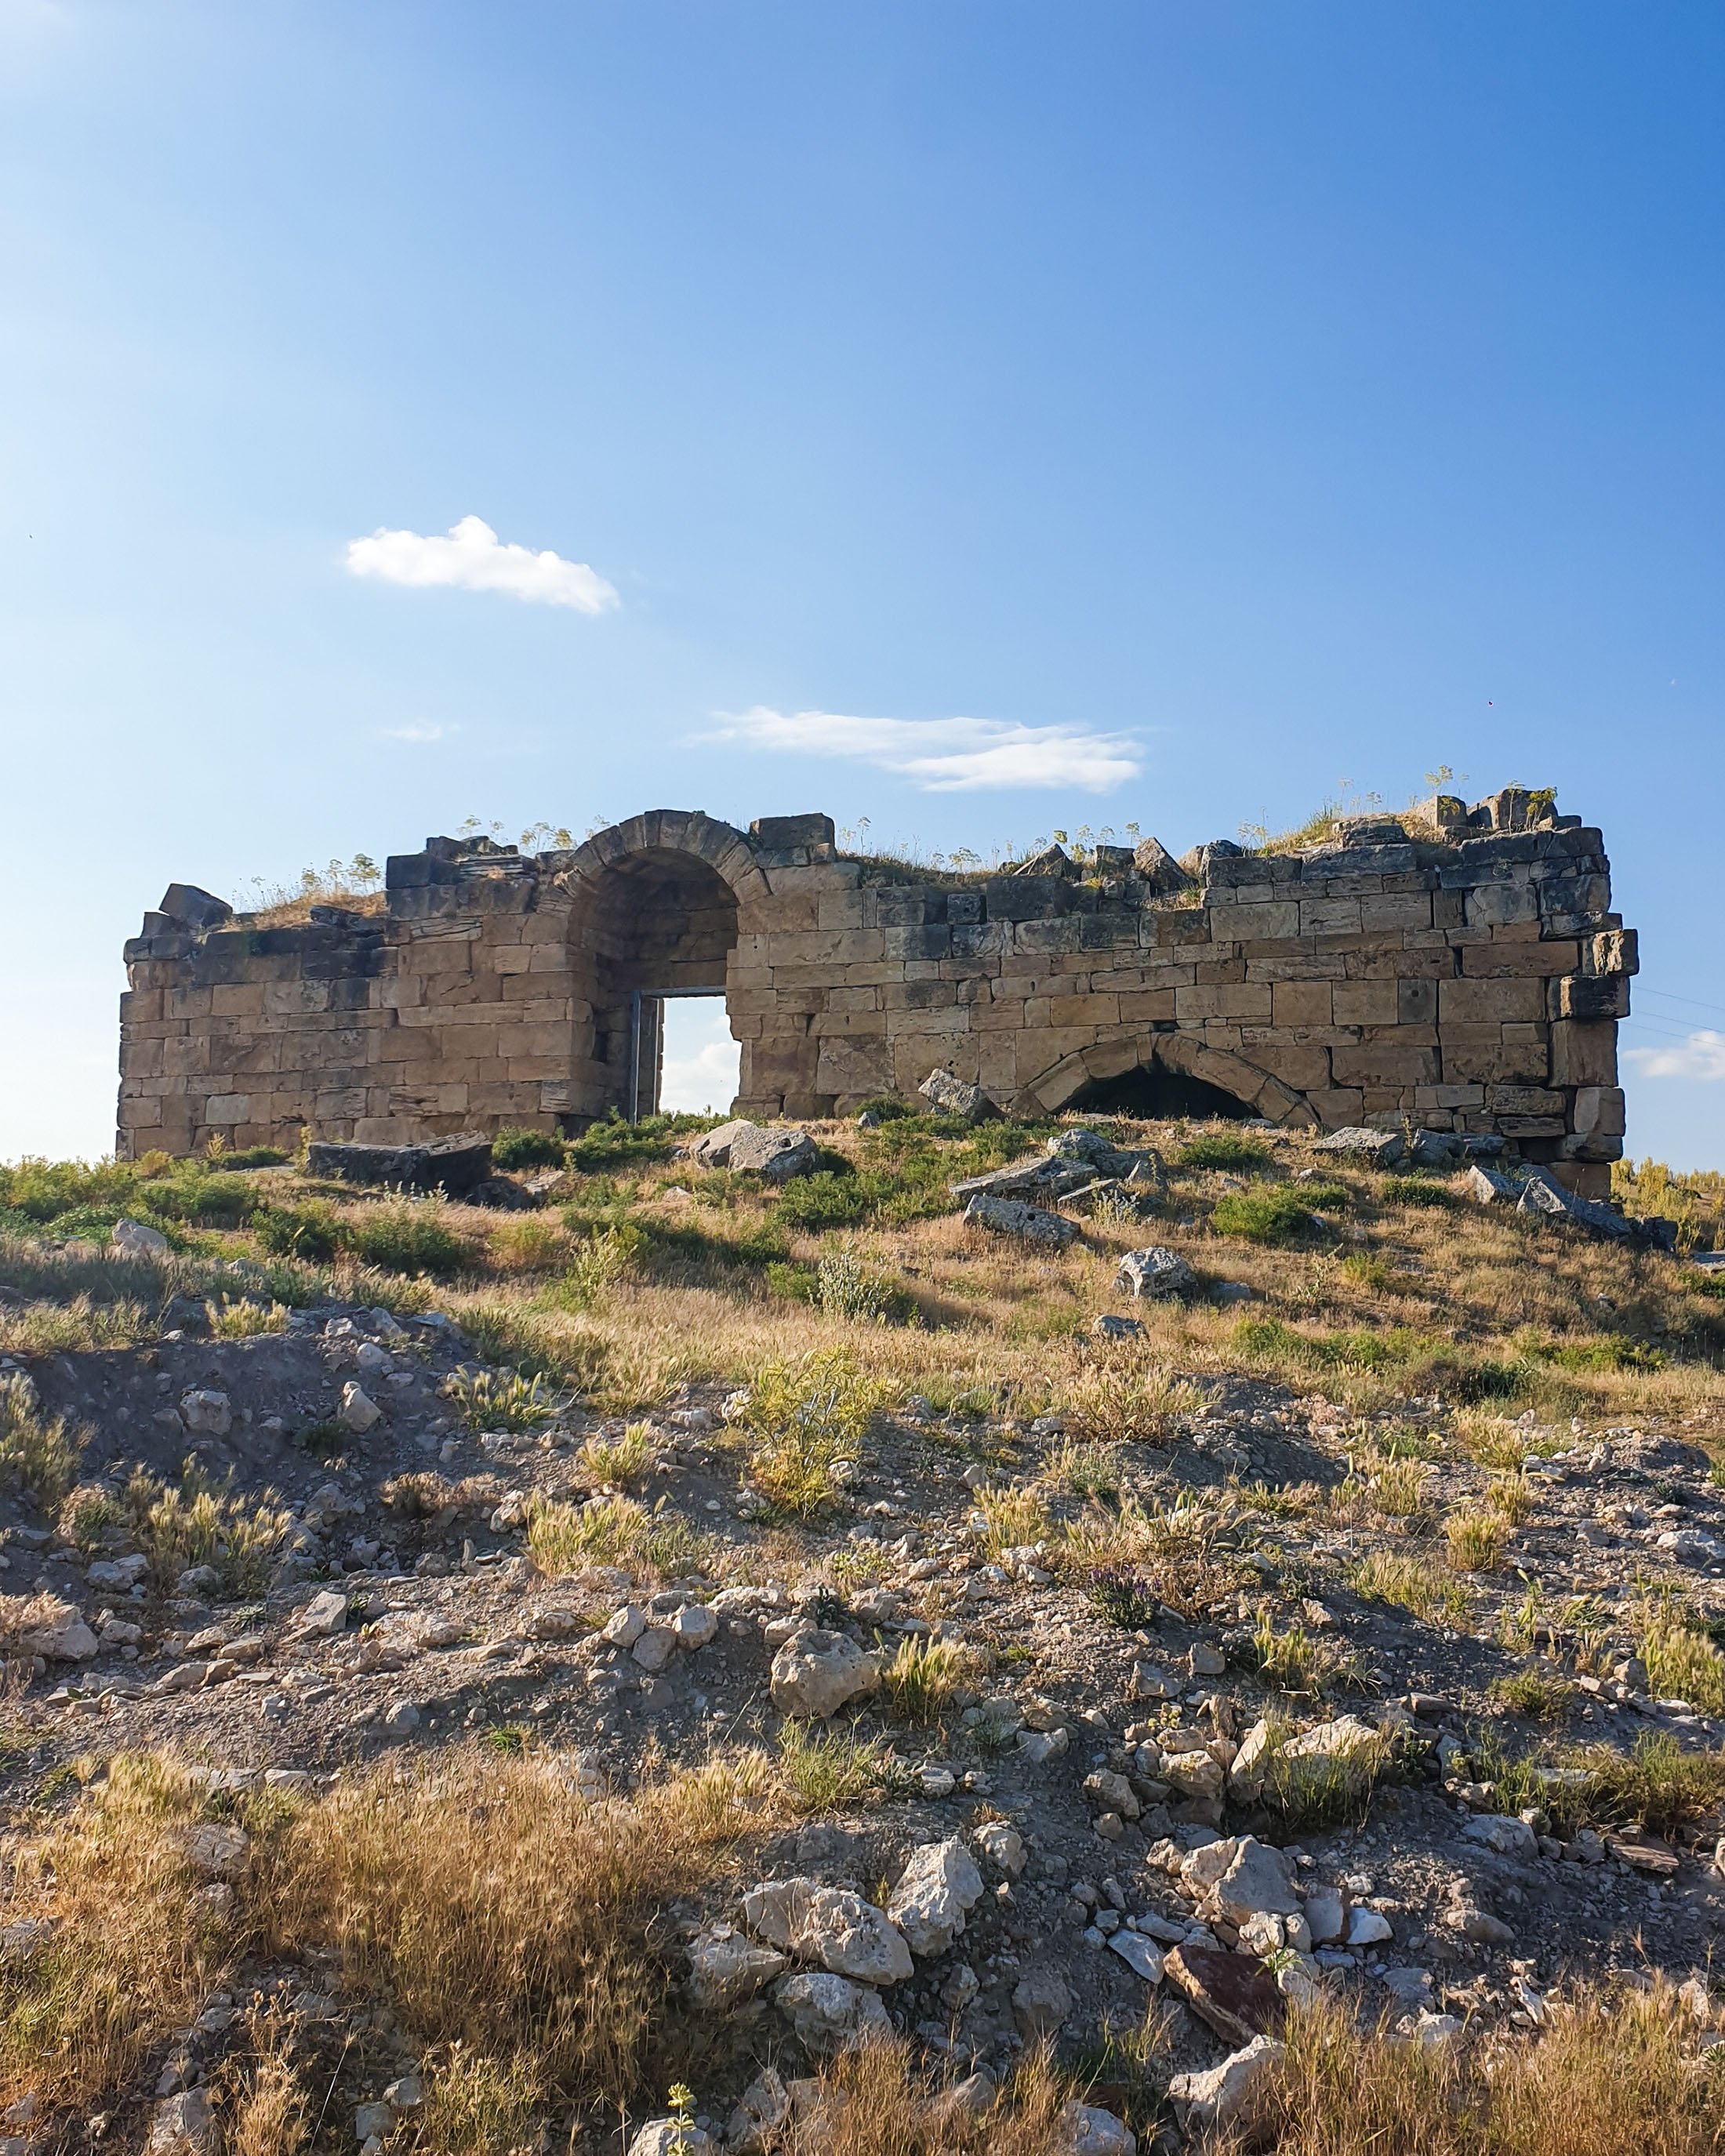 The entrance to the ancient city of Blaundus, Uşak, western Turkey. (Photo by Argun Konuk)